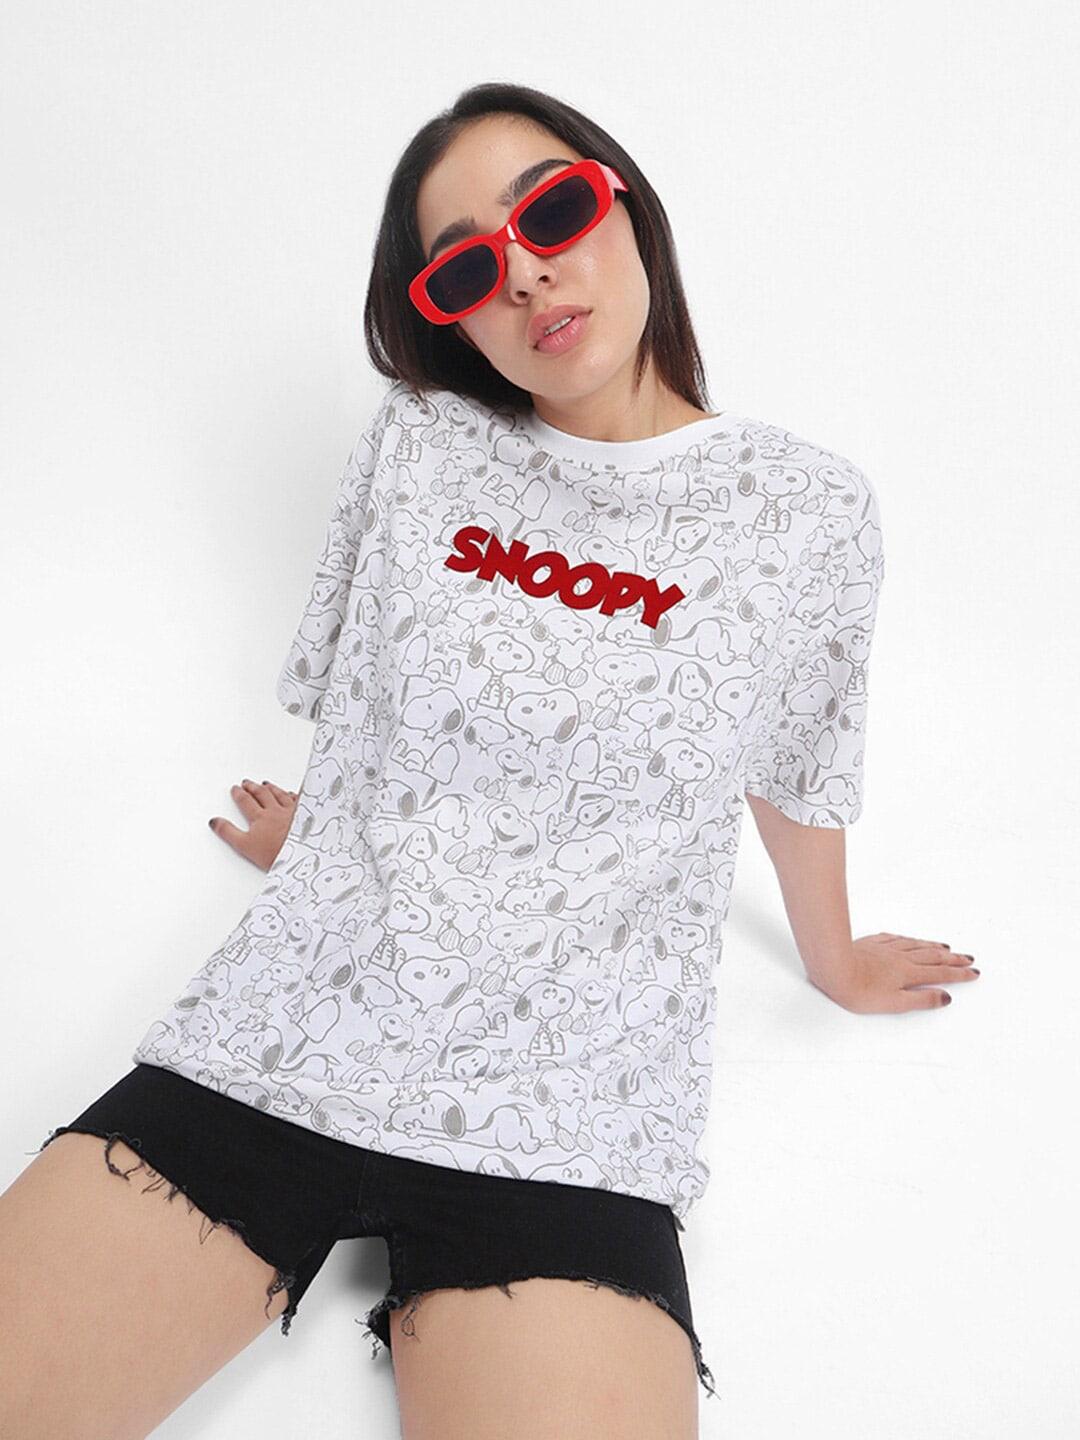 Bewakoof White & Brown Snoopy Printed Pure Cotton T-shirt